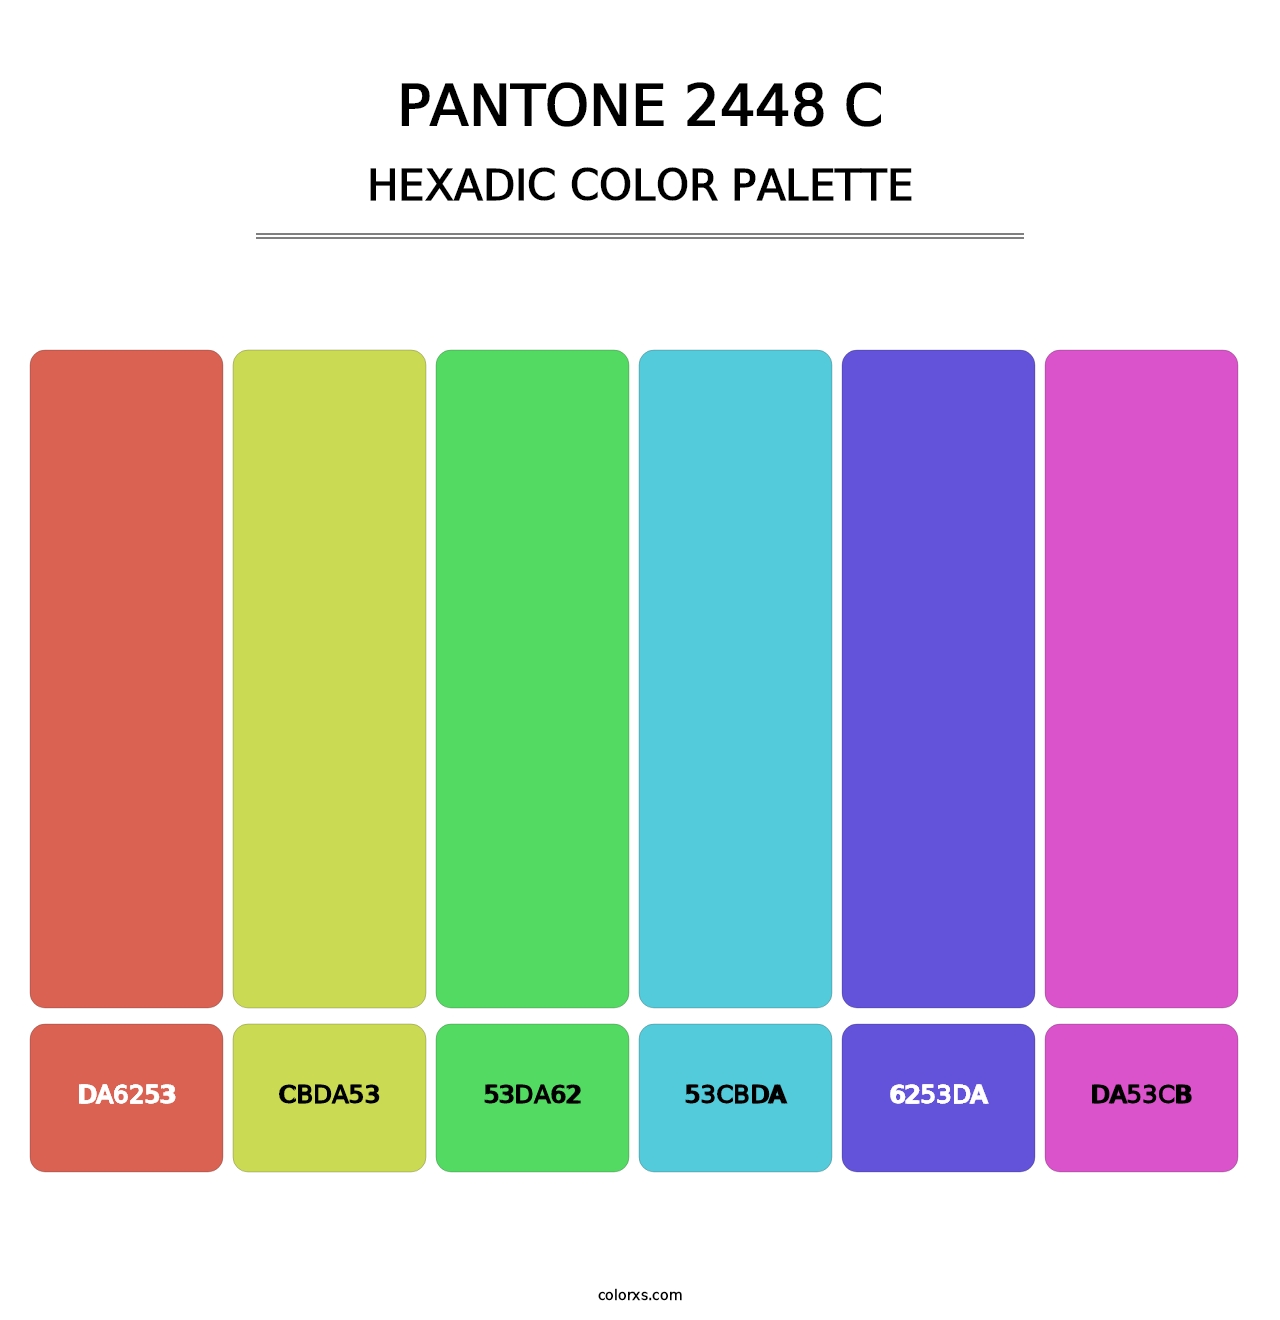 PANTONE 2448 C - Hexadic Color Palette